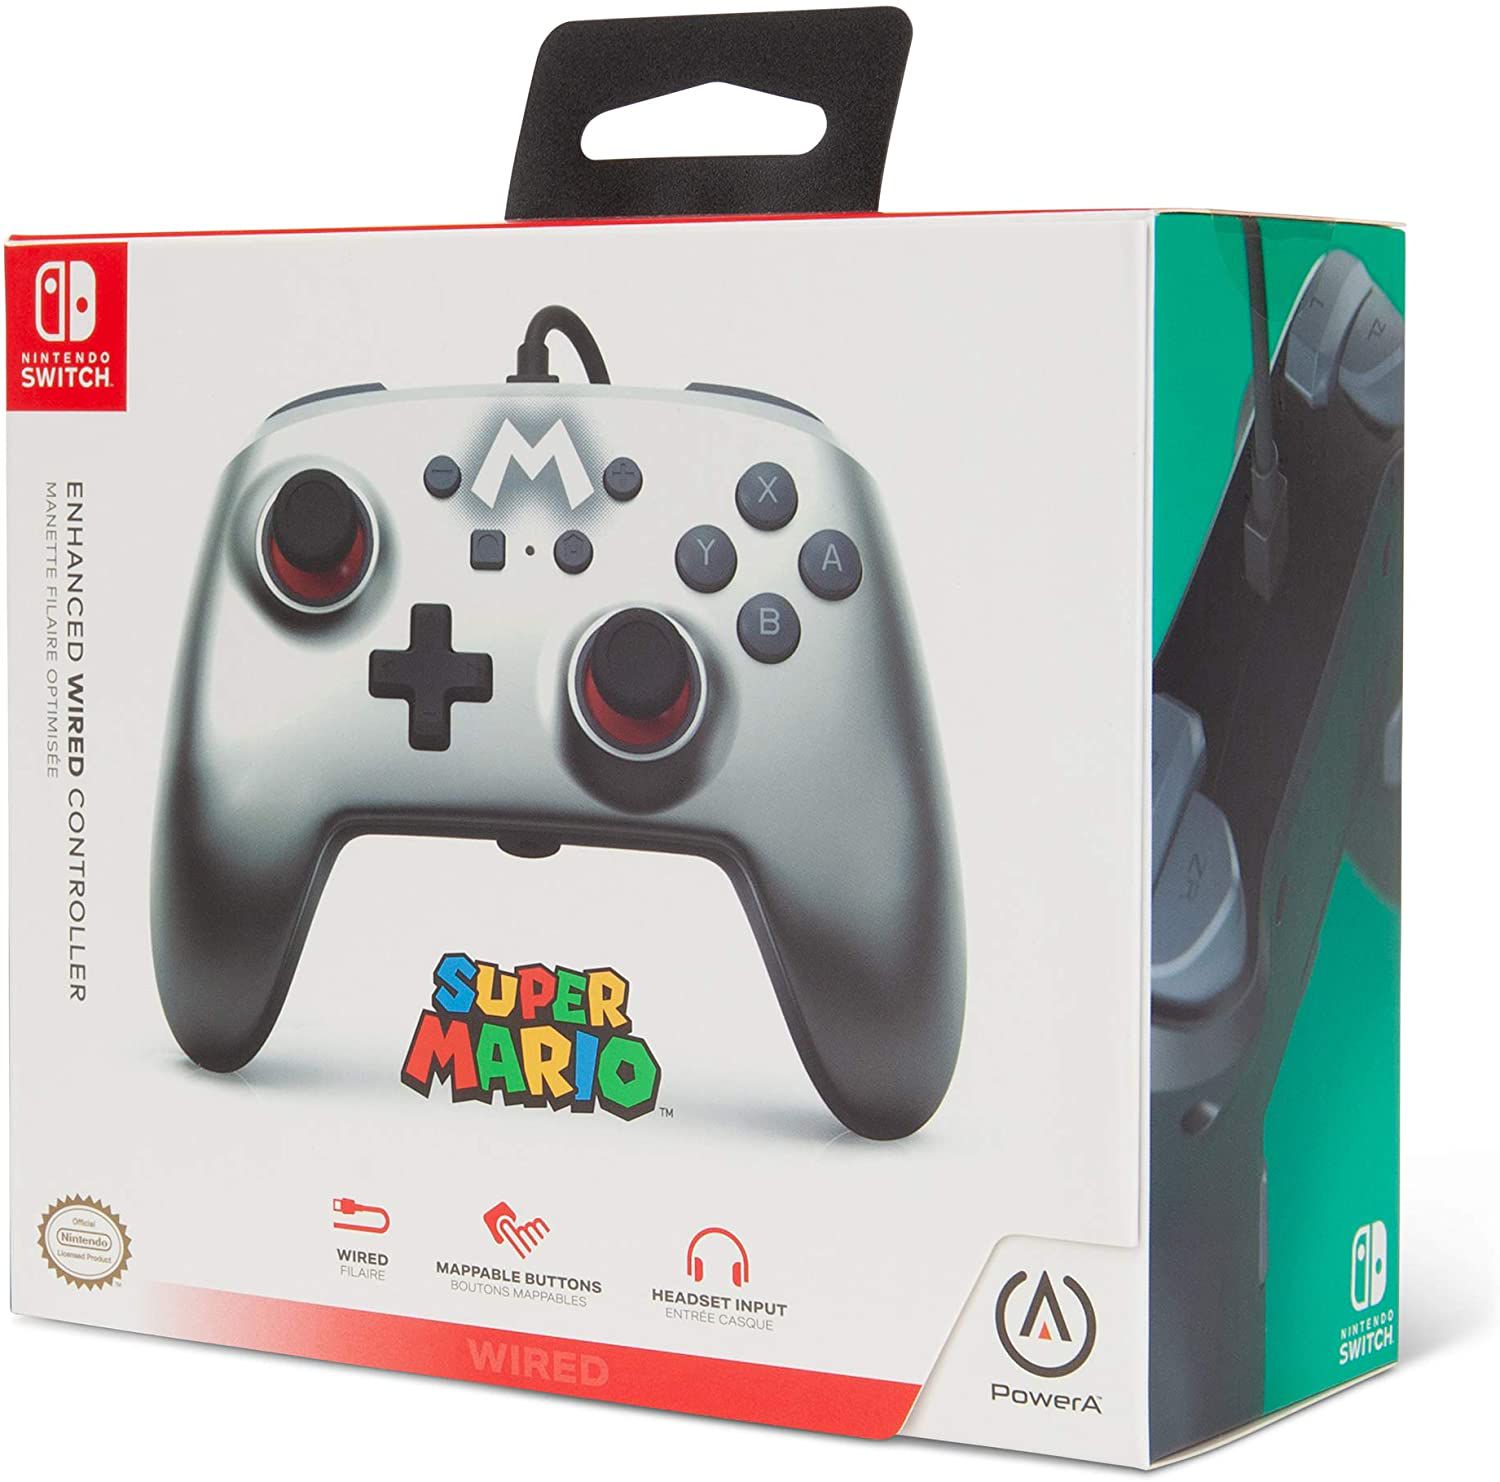 Jogo Switch Super Mario Maker 2 - Brasil Games - Console PS5 - Jogos para  PS4 - Jogos para Xbox One - Jogos par Nintendo Switch - Cartões PSN - PC  Gamer